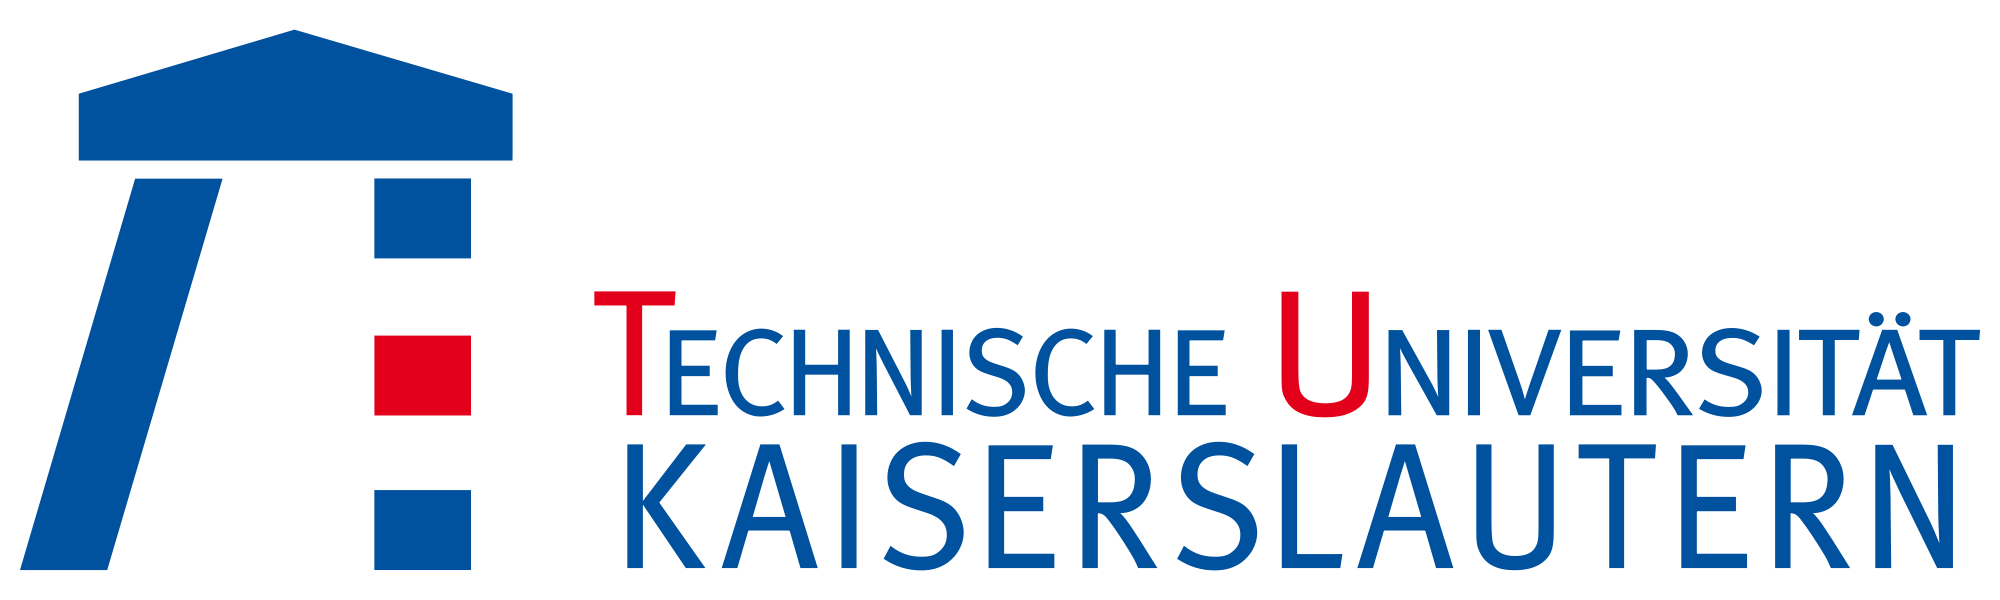 Technical University Kaiserslautern - GRIAT Partner university